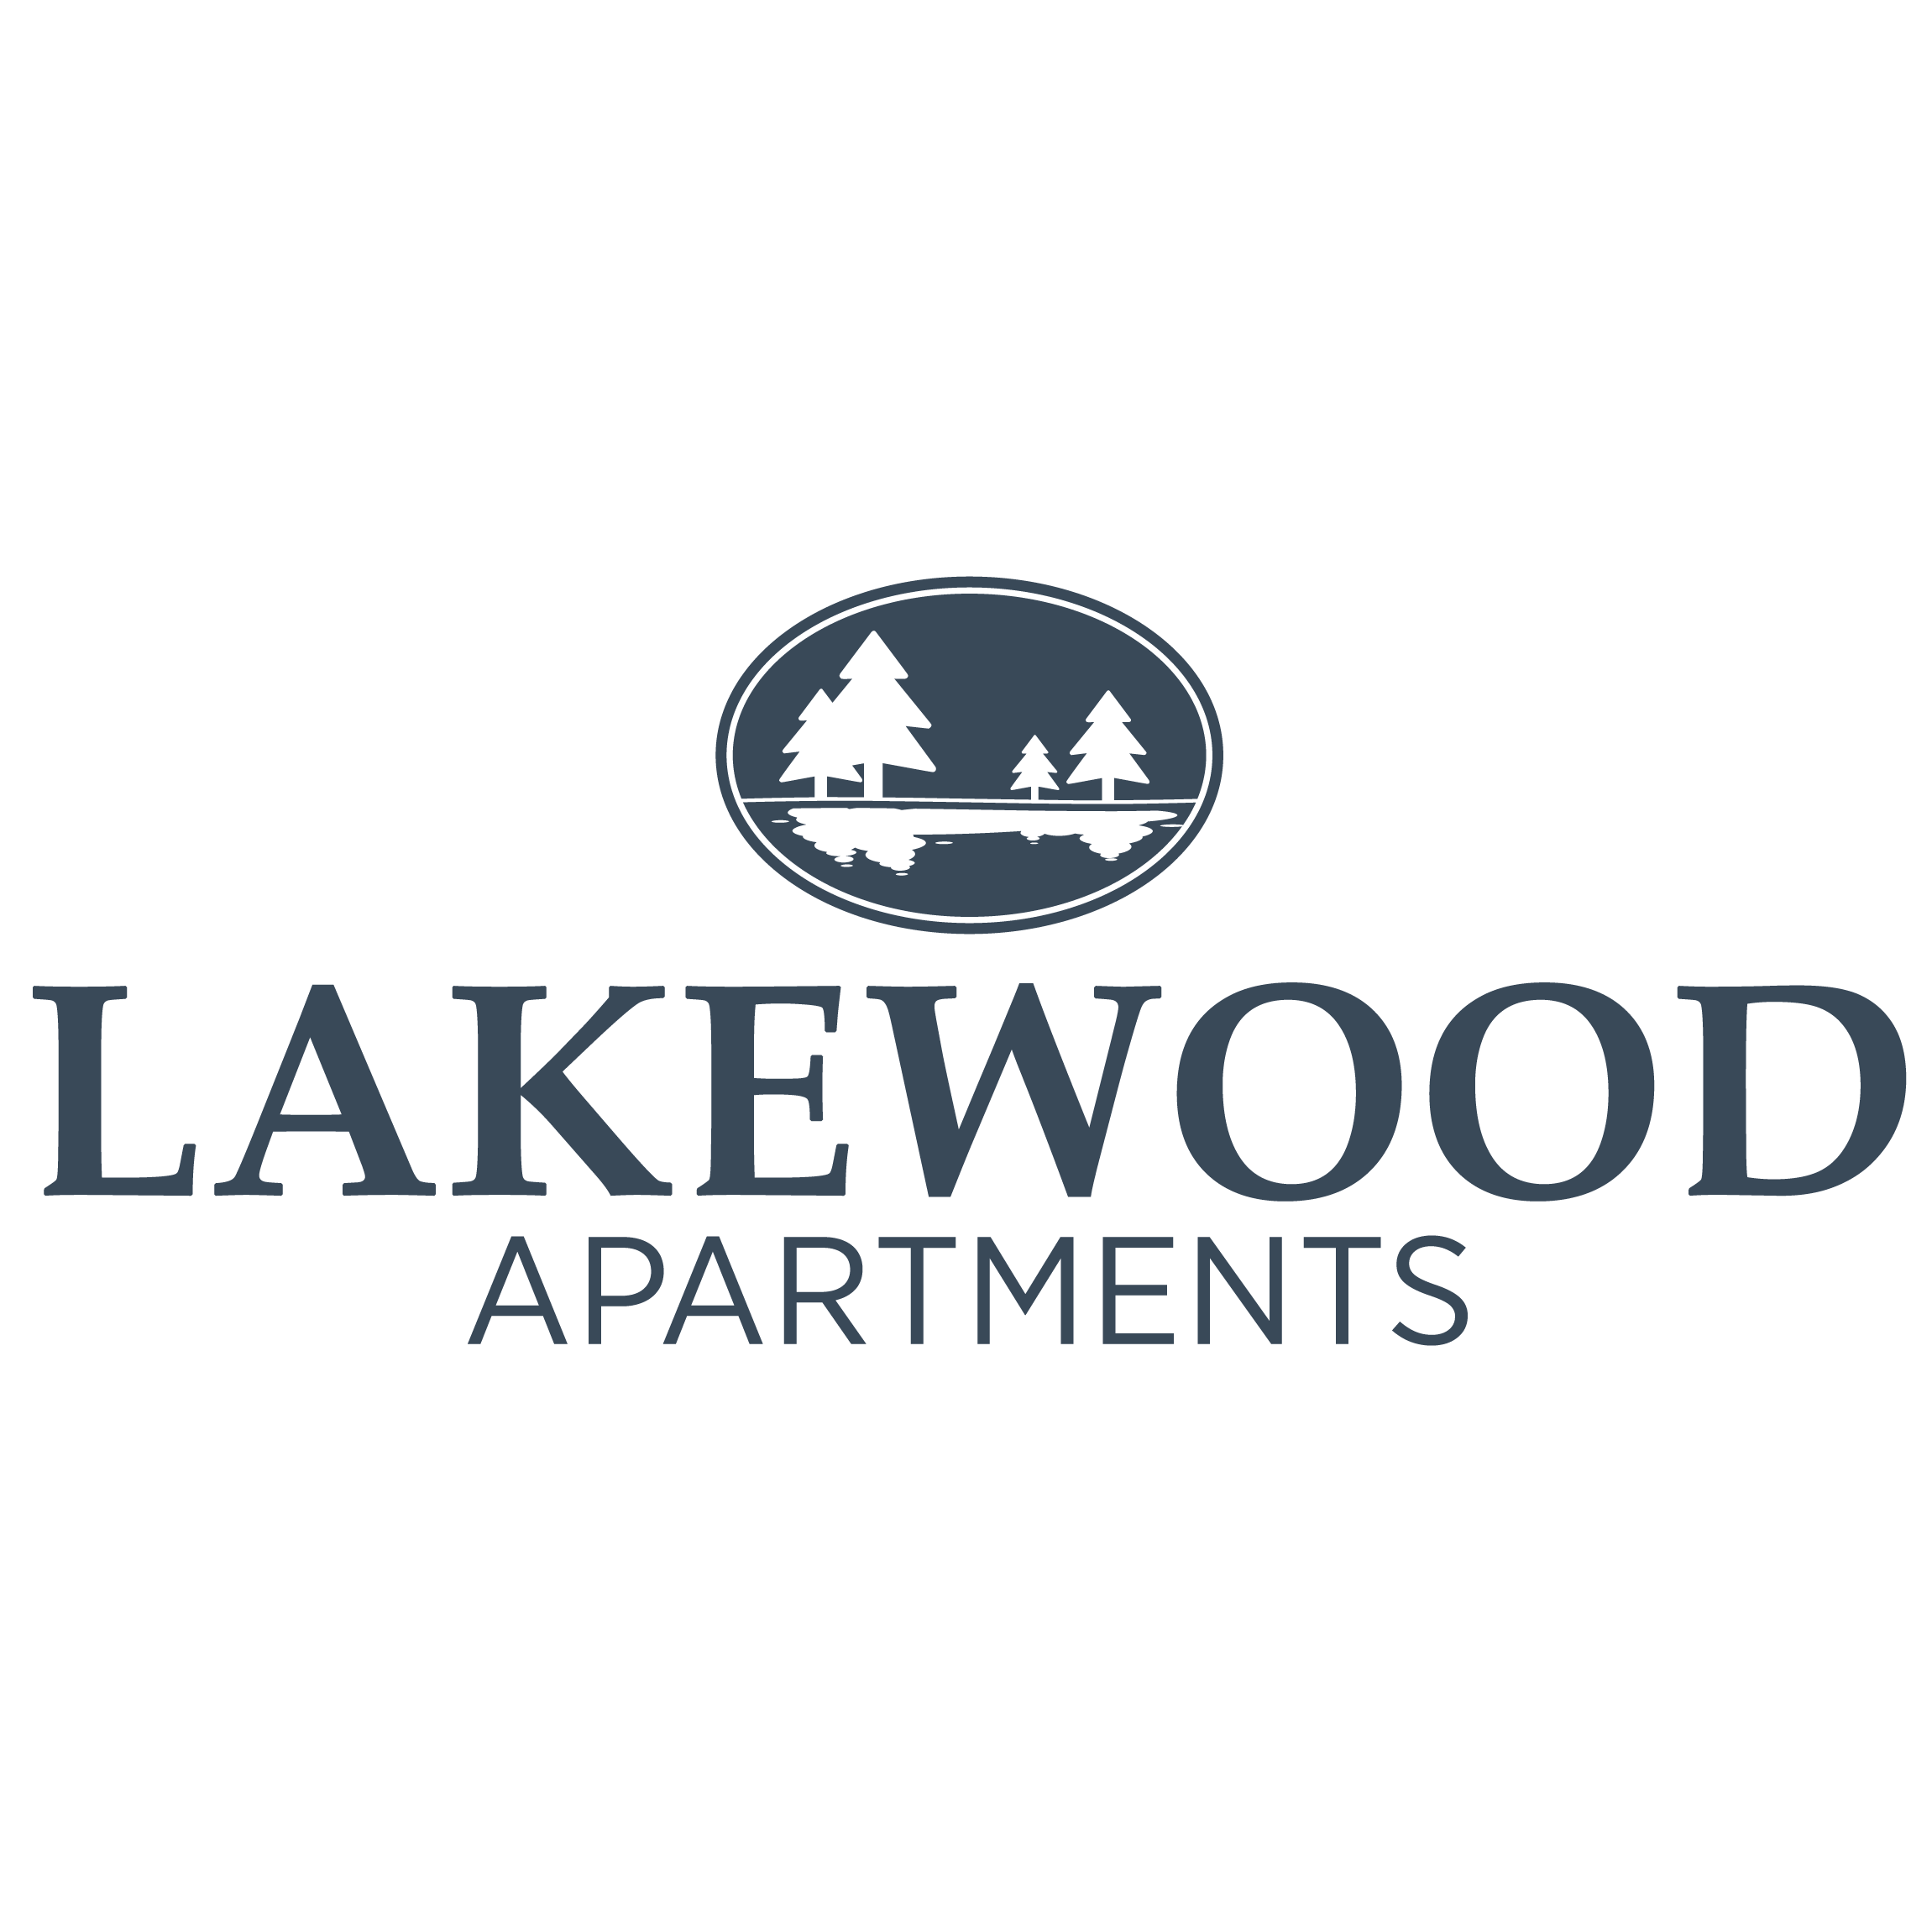 Lakewood Apartments